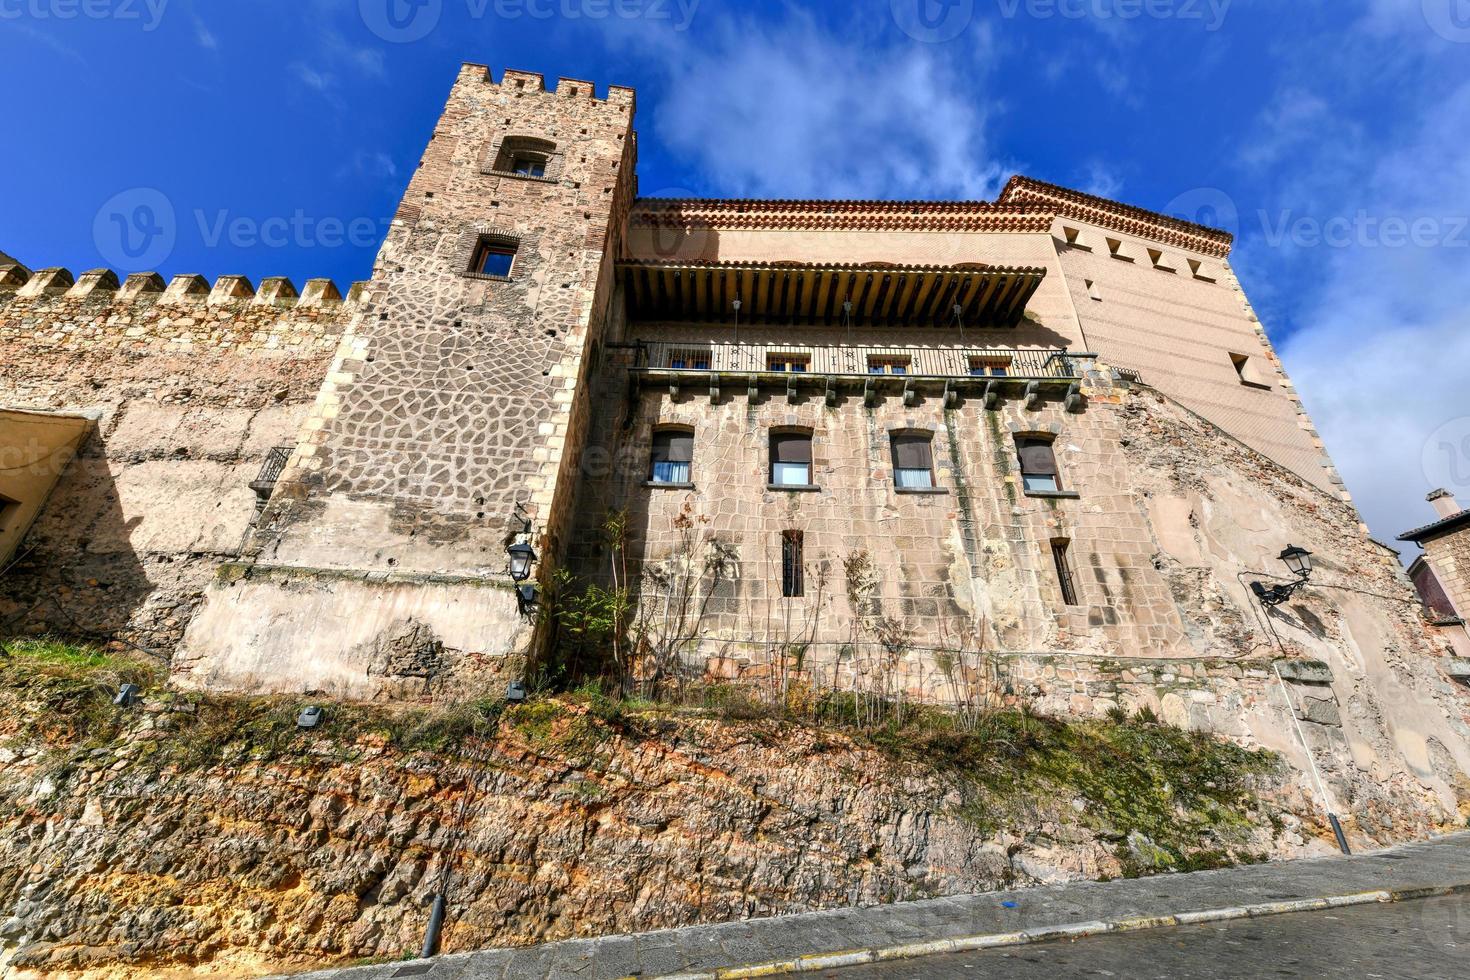 Casa de las Cadenas, one of the main fortress-houses in Segovia, Spain. photo